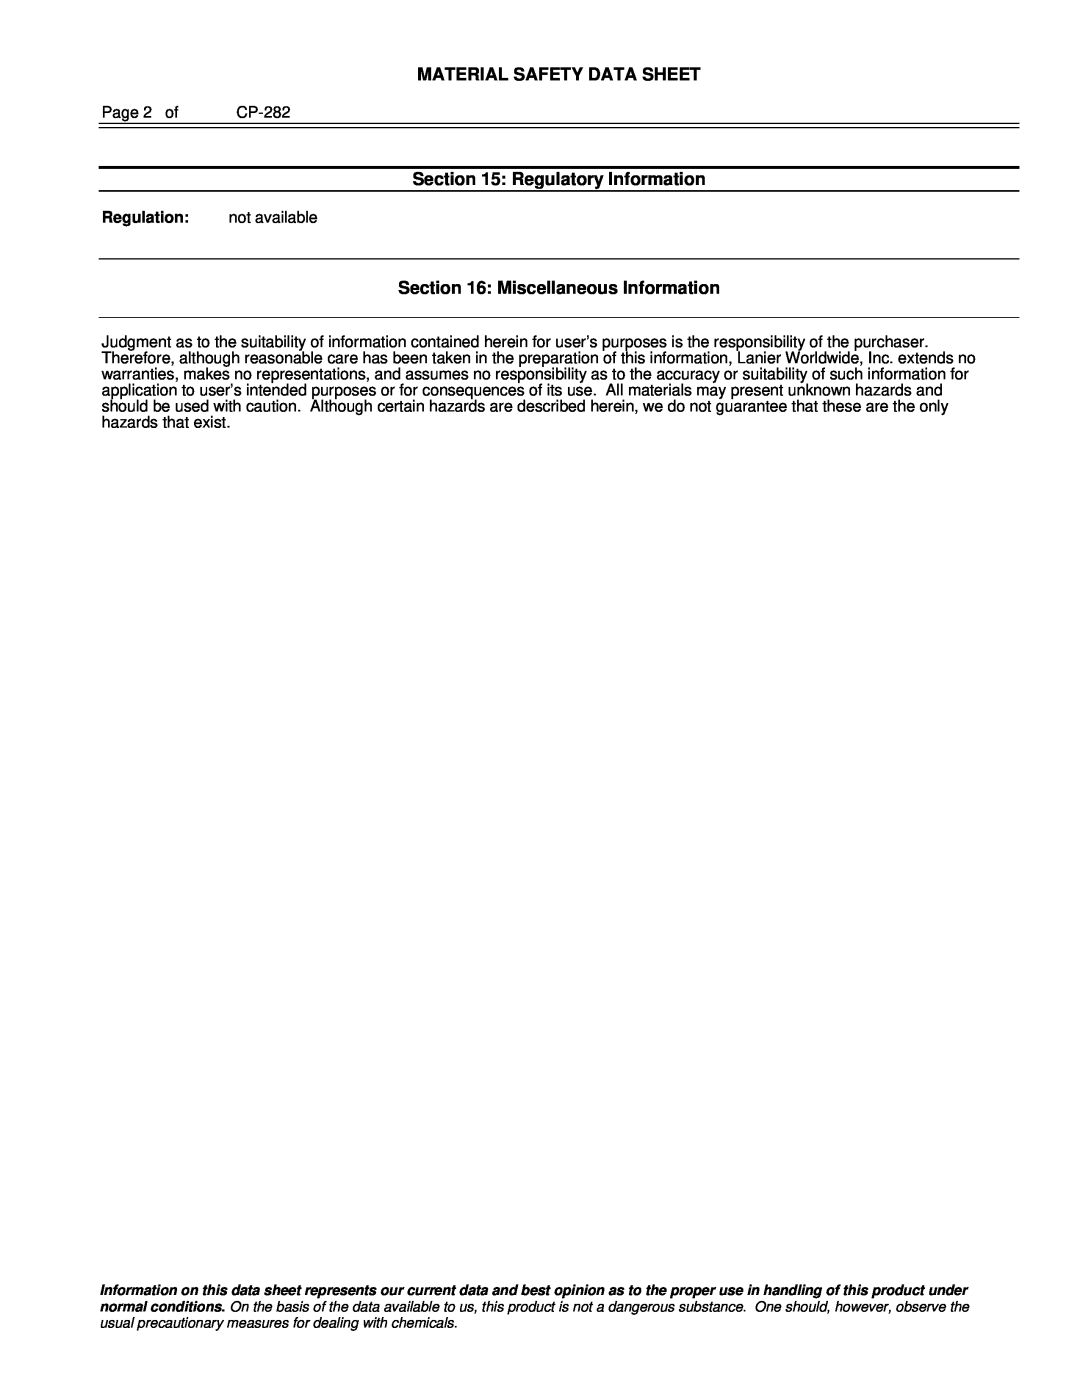 Lanier CP-282 manual Material Safety Data Sheet, Regulatory Information, Miscellaneous Information, Regulation 